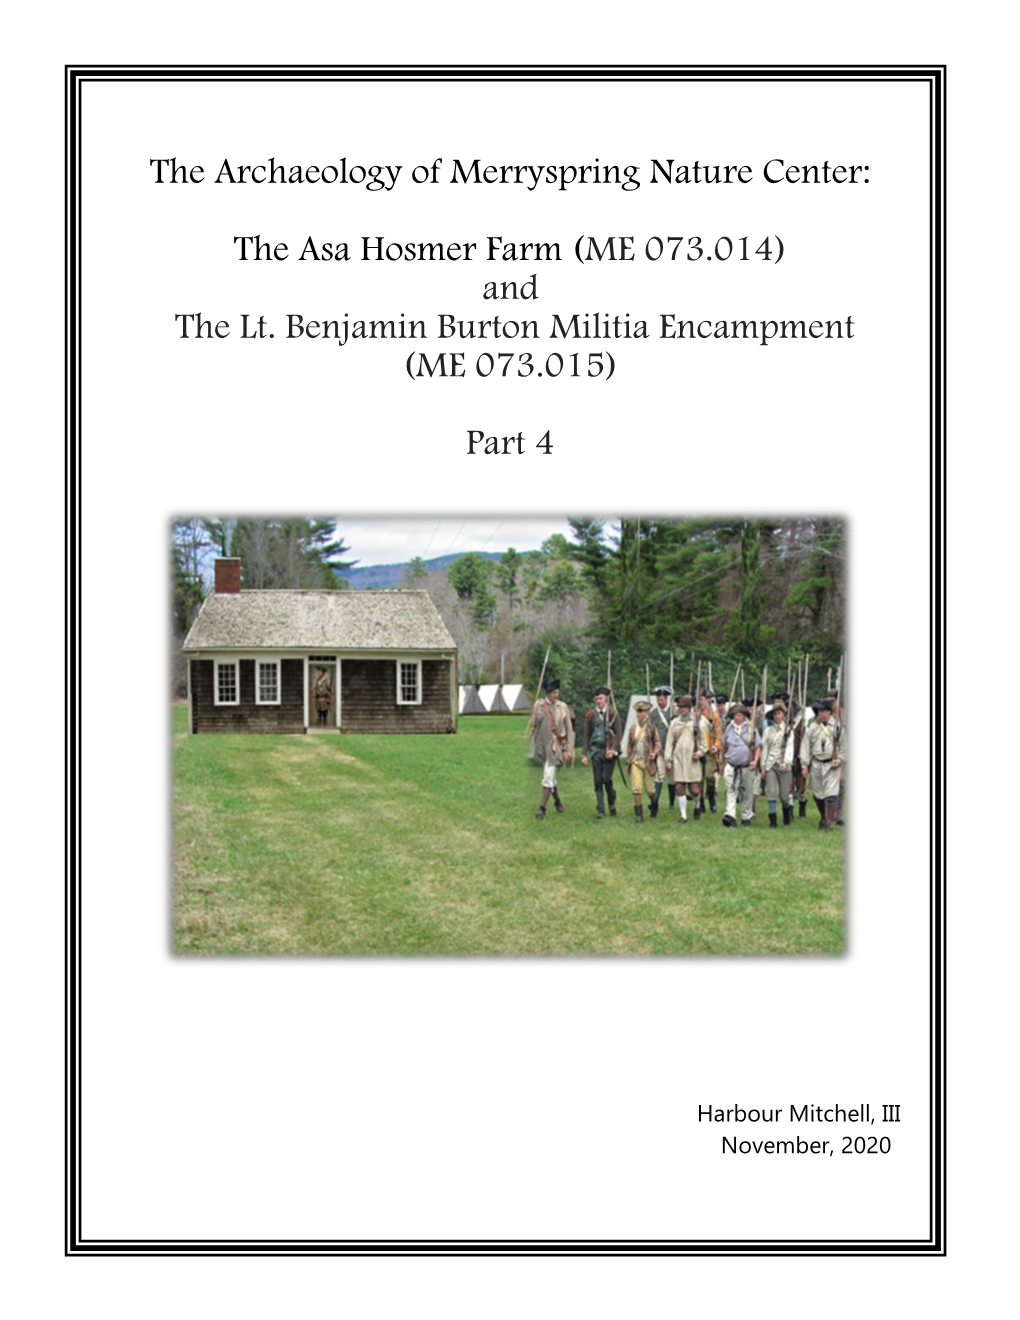 The Archaeology of Merryspring Nature Center: the Asa Hosmer Farm (ME 073.014) and the Lt. Benjamin Burton Militia Encampment